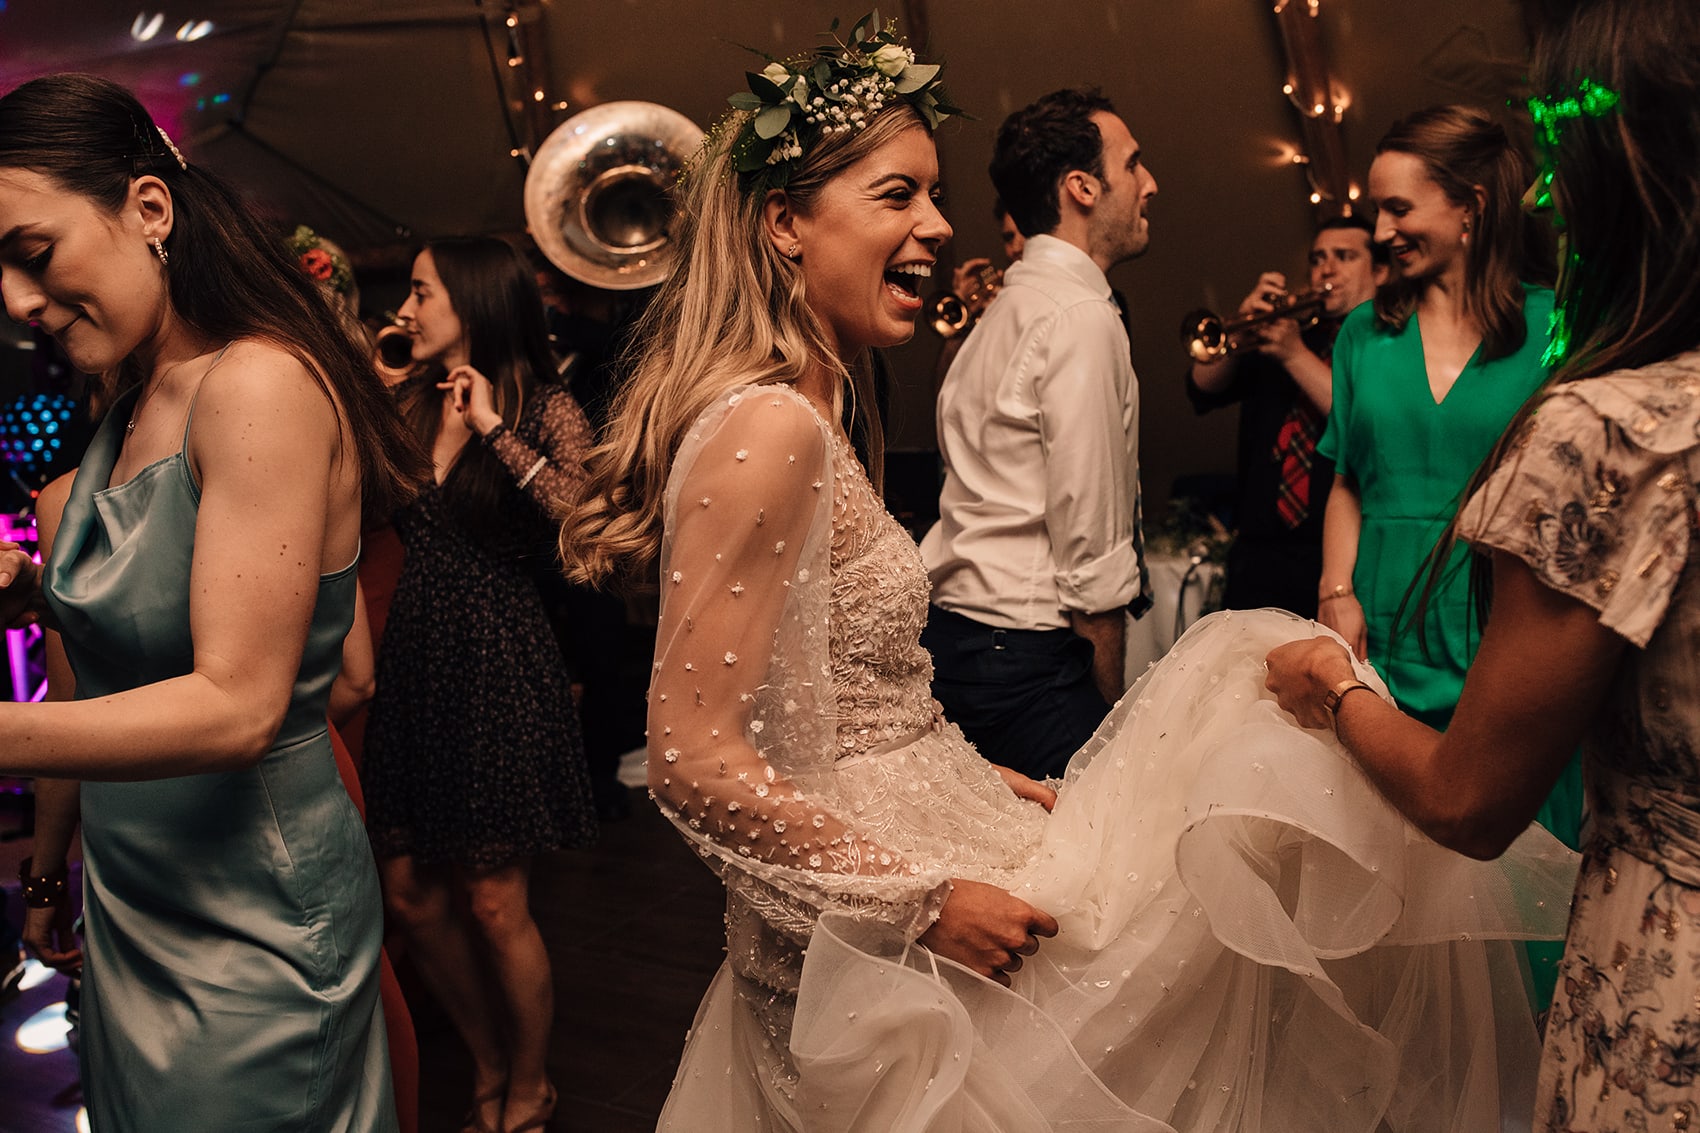 lively wedding dance-floor photography